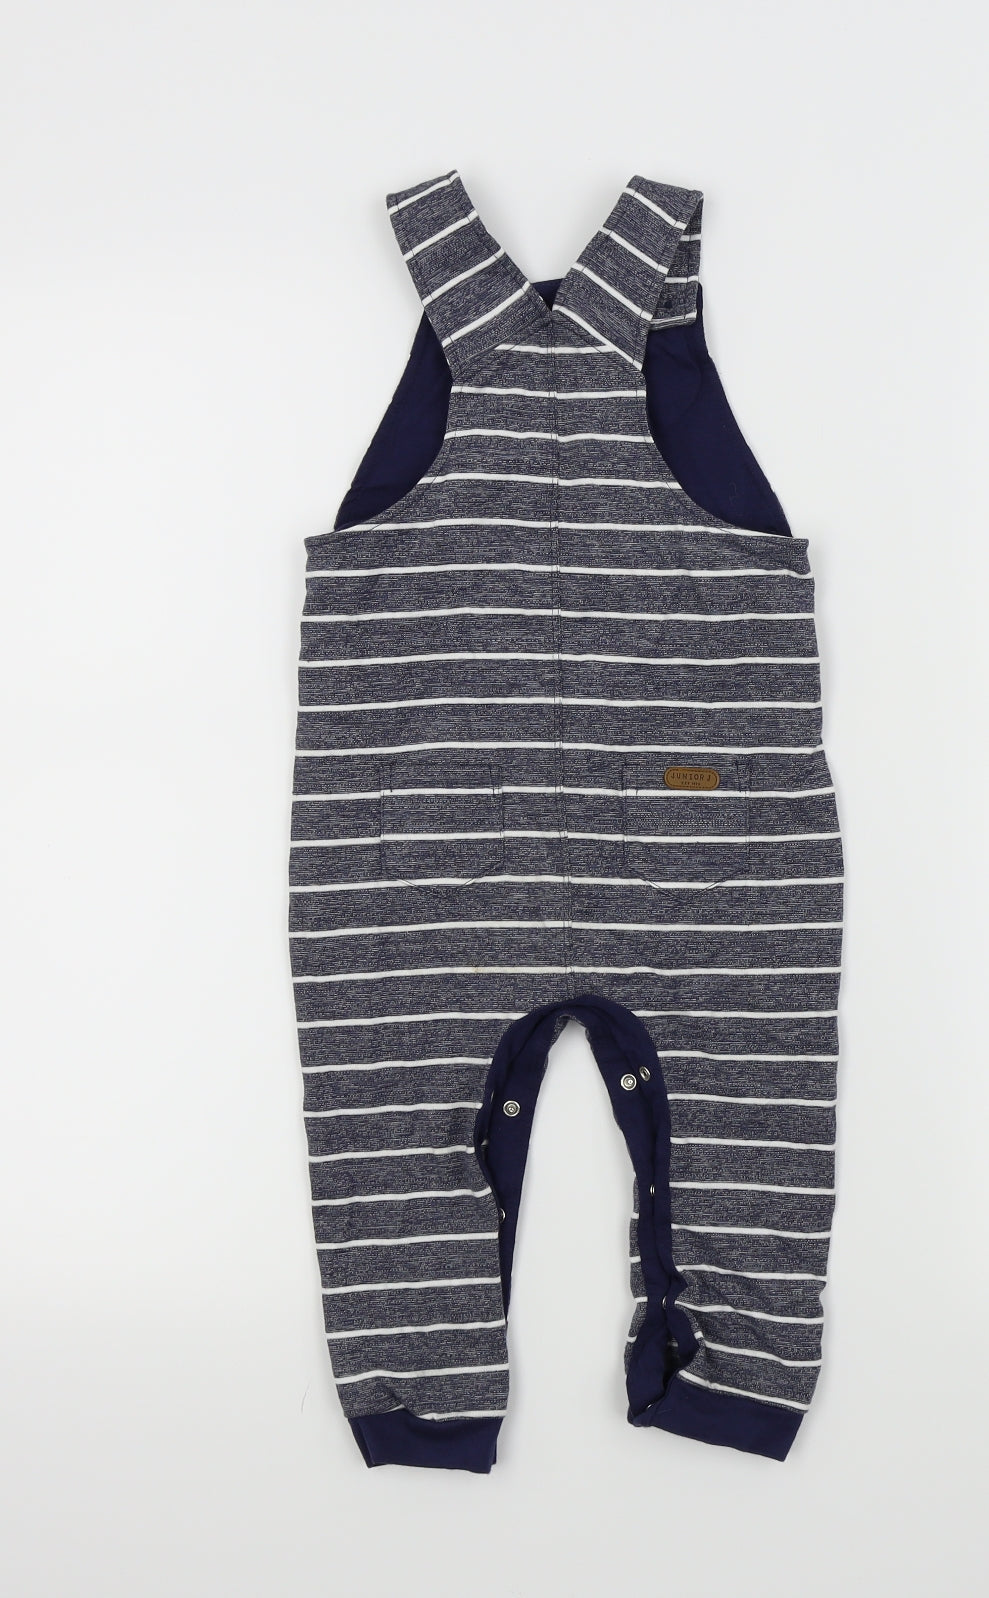 Jasper Conran Boys Blue Striped  Babygrow One-Piece Size 18-24 Months  - Whale